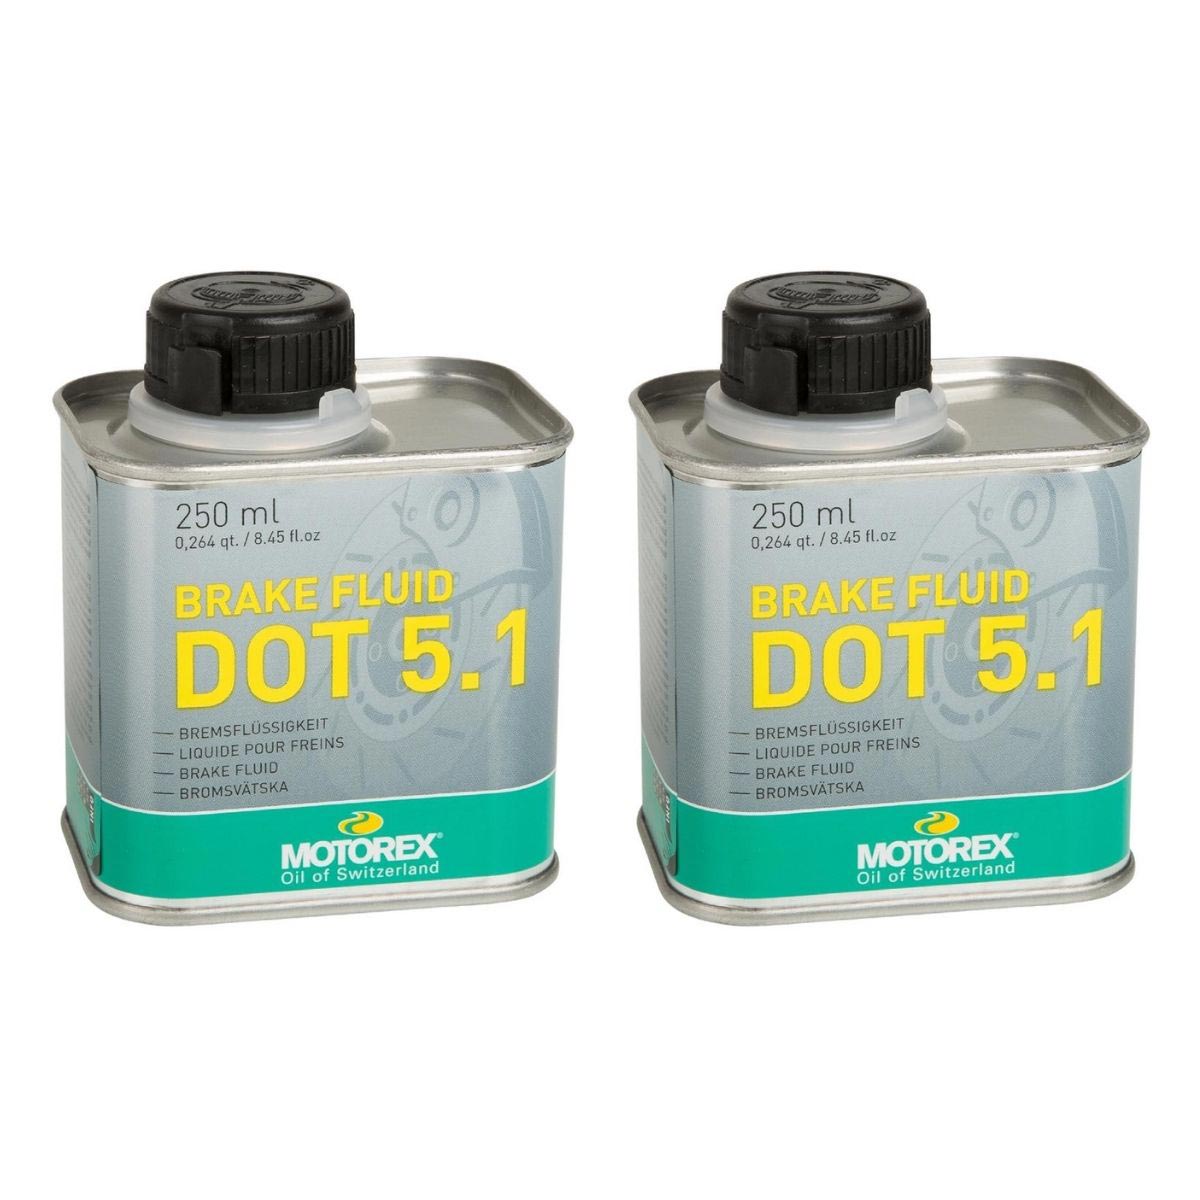 Motorex Brake Fluid DOT 5.1 Set of 2, 250 ml each